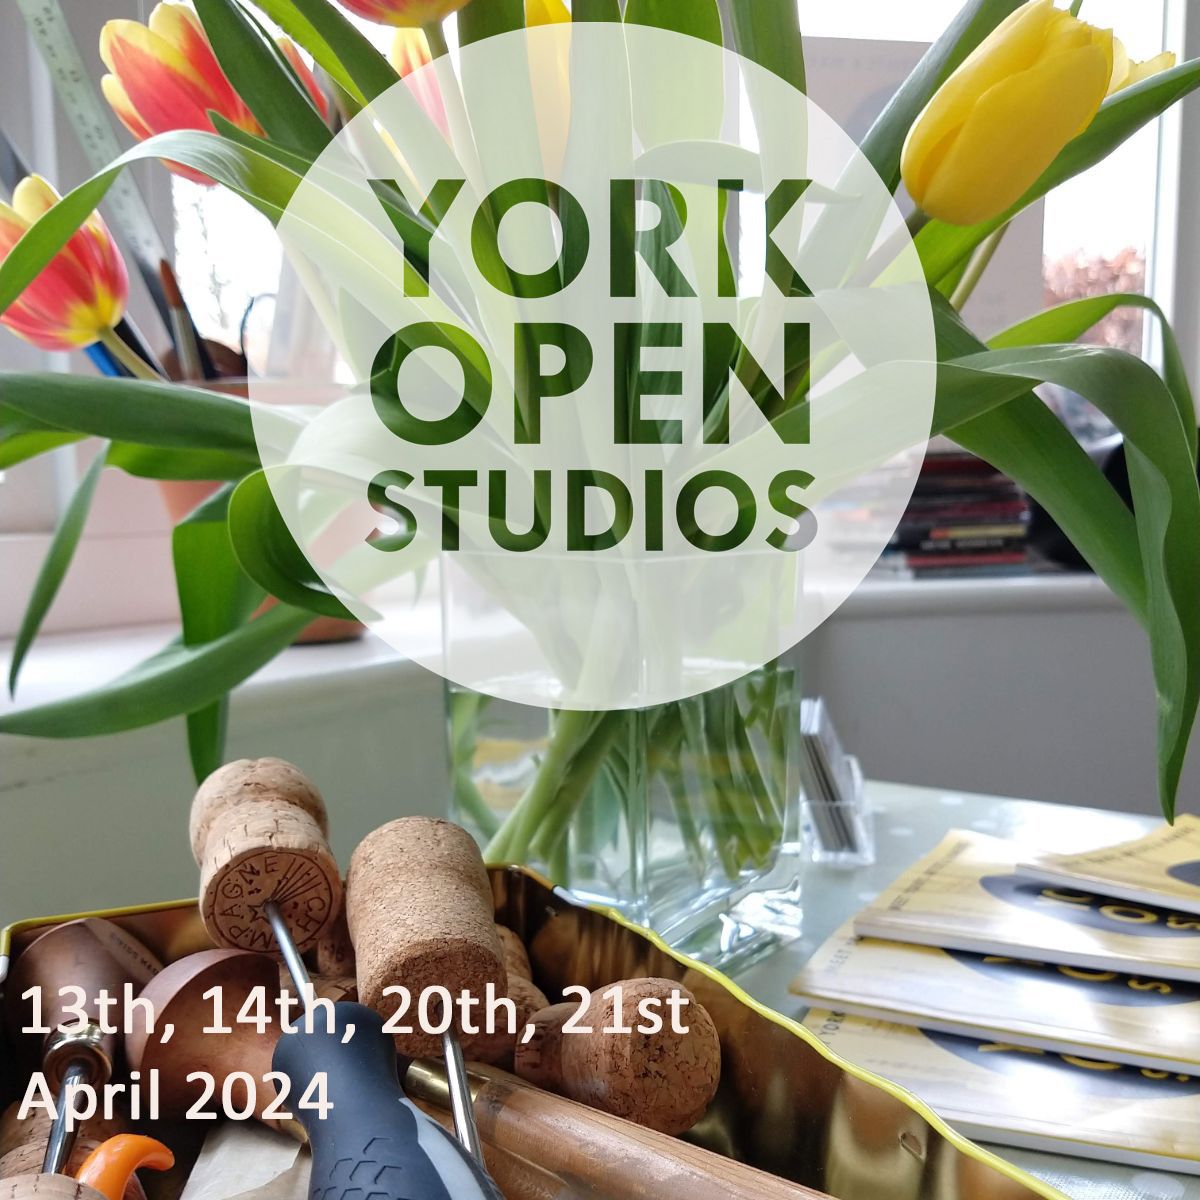 York Open Studios - 13th, 14th, 20th, 21st April 2024